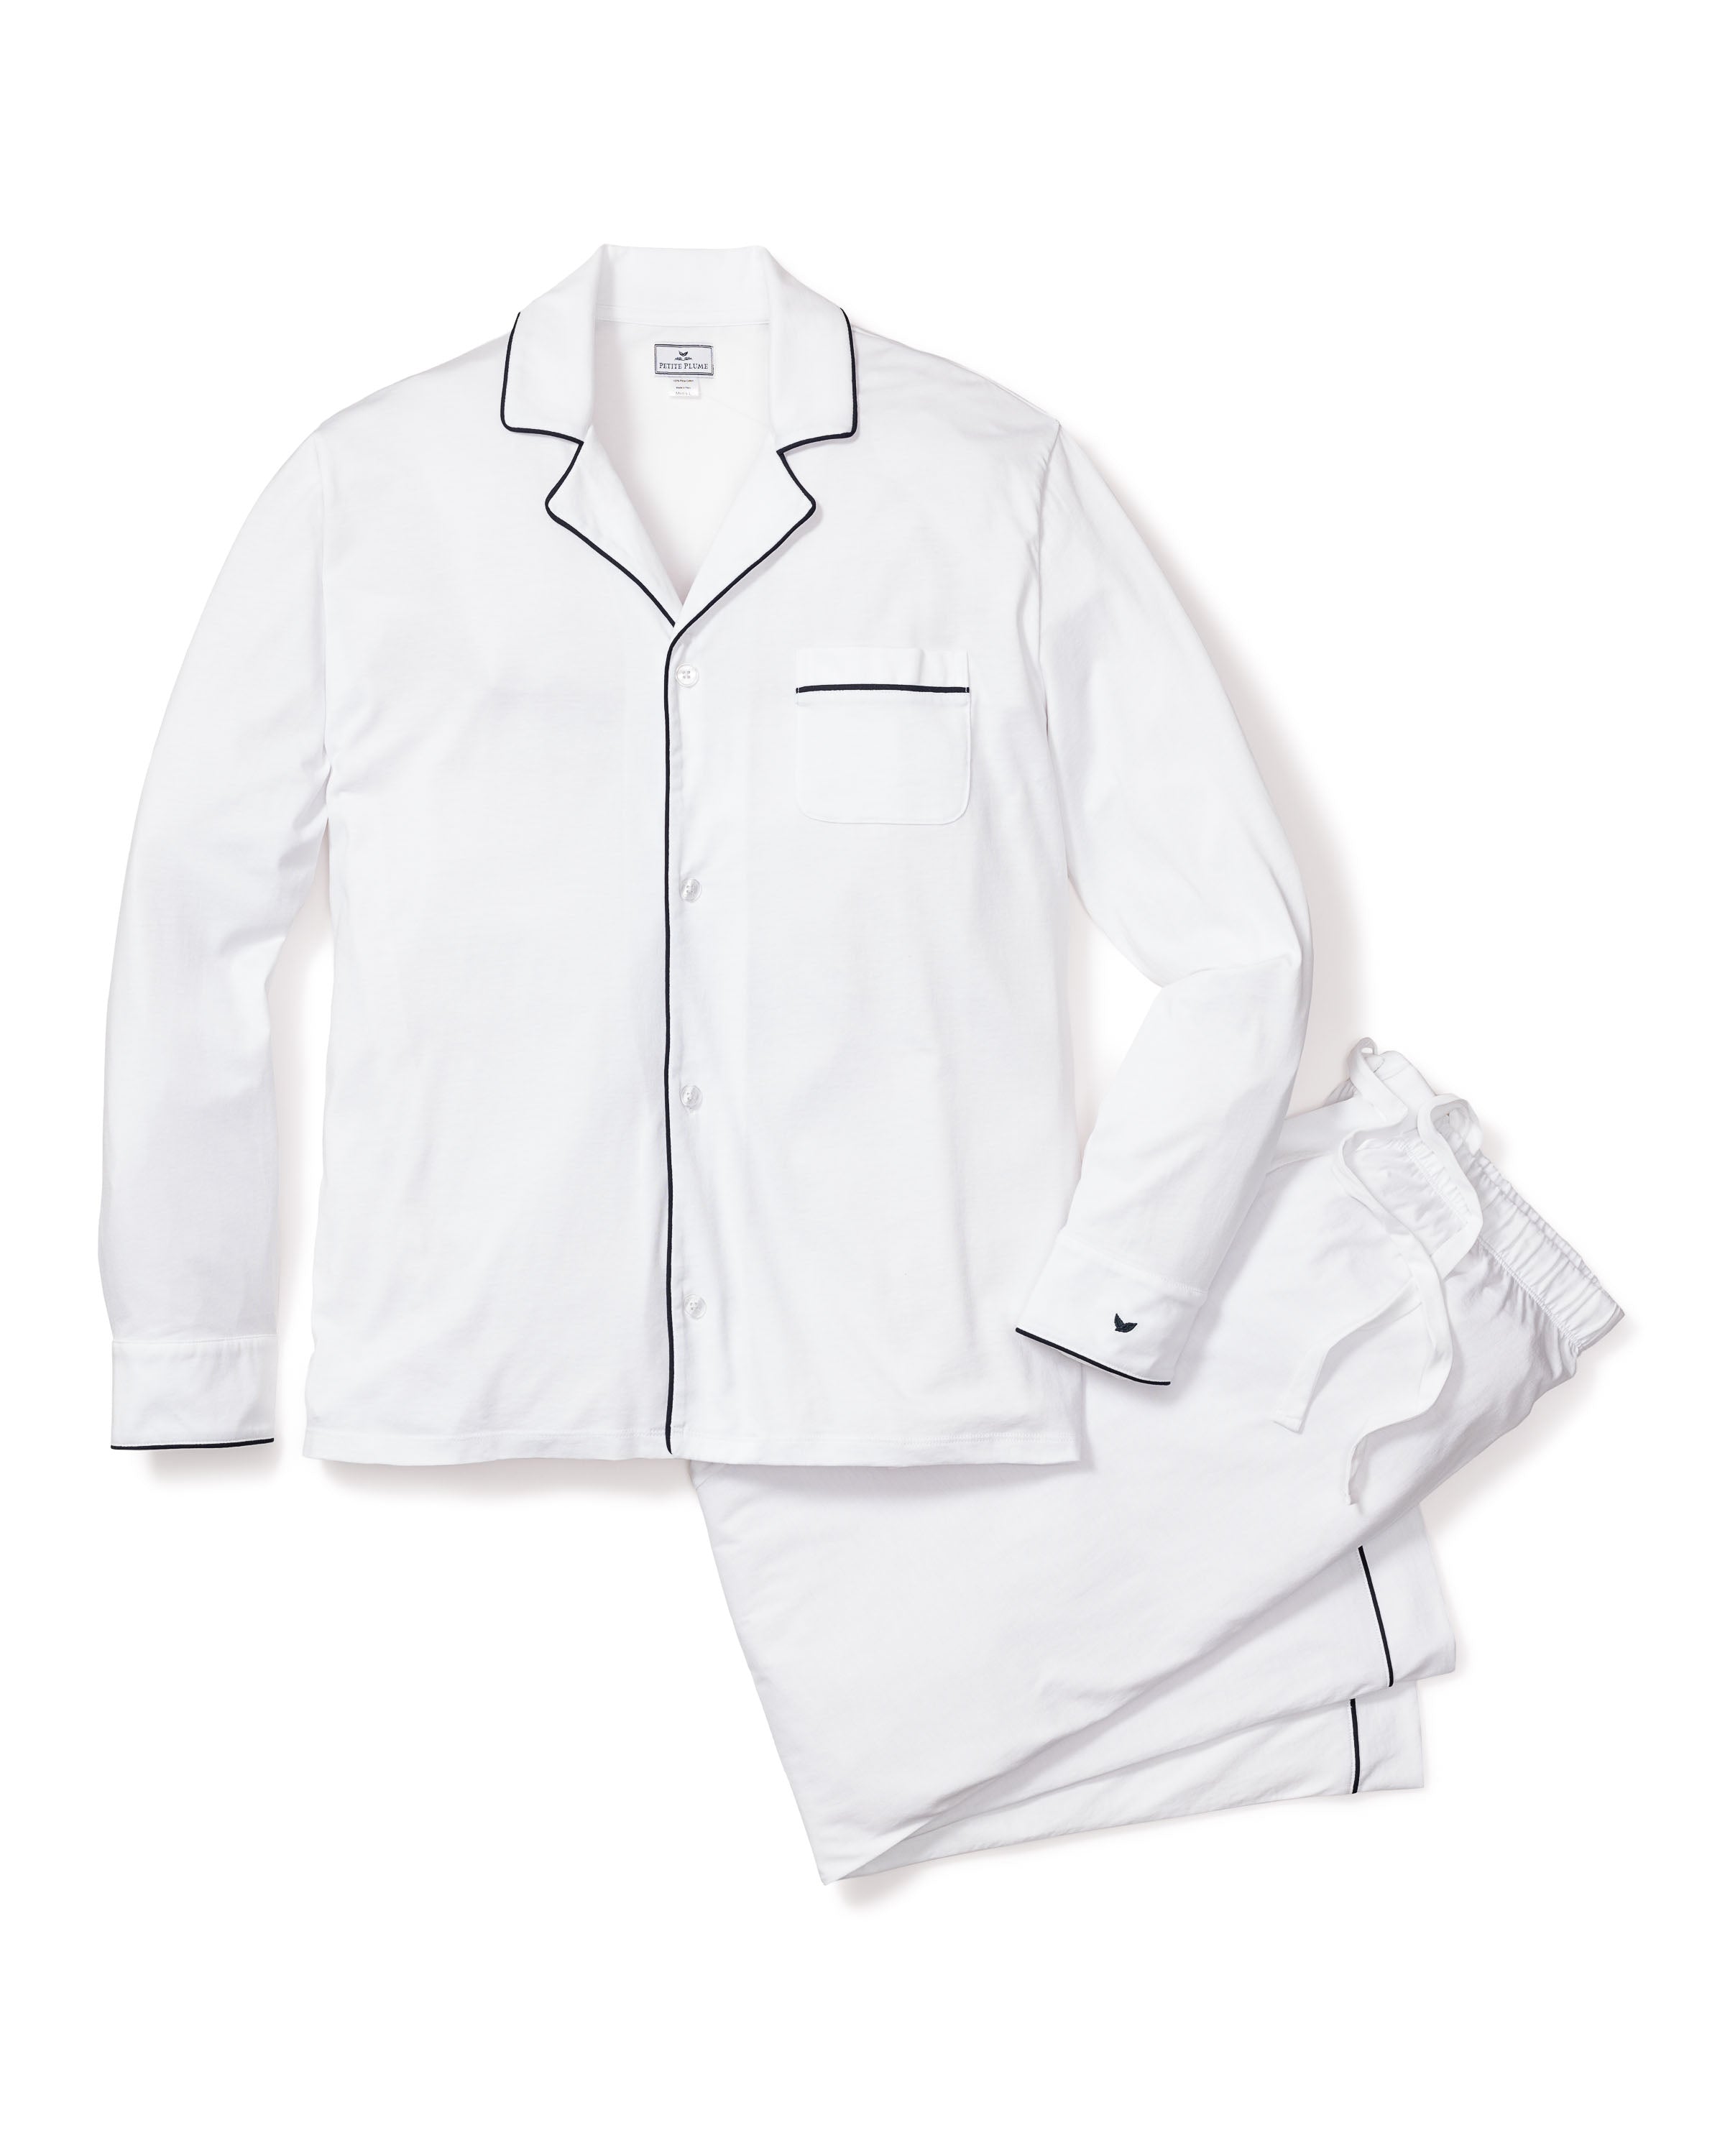 Luxe Pima Men's White with Navy Piping Pajama | Petite Plume